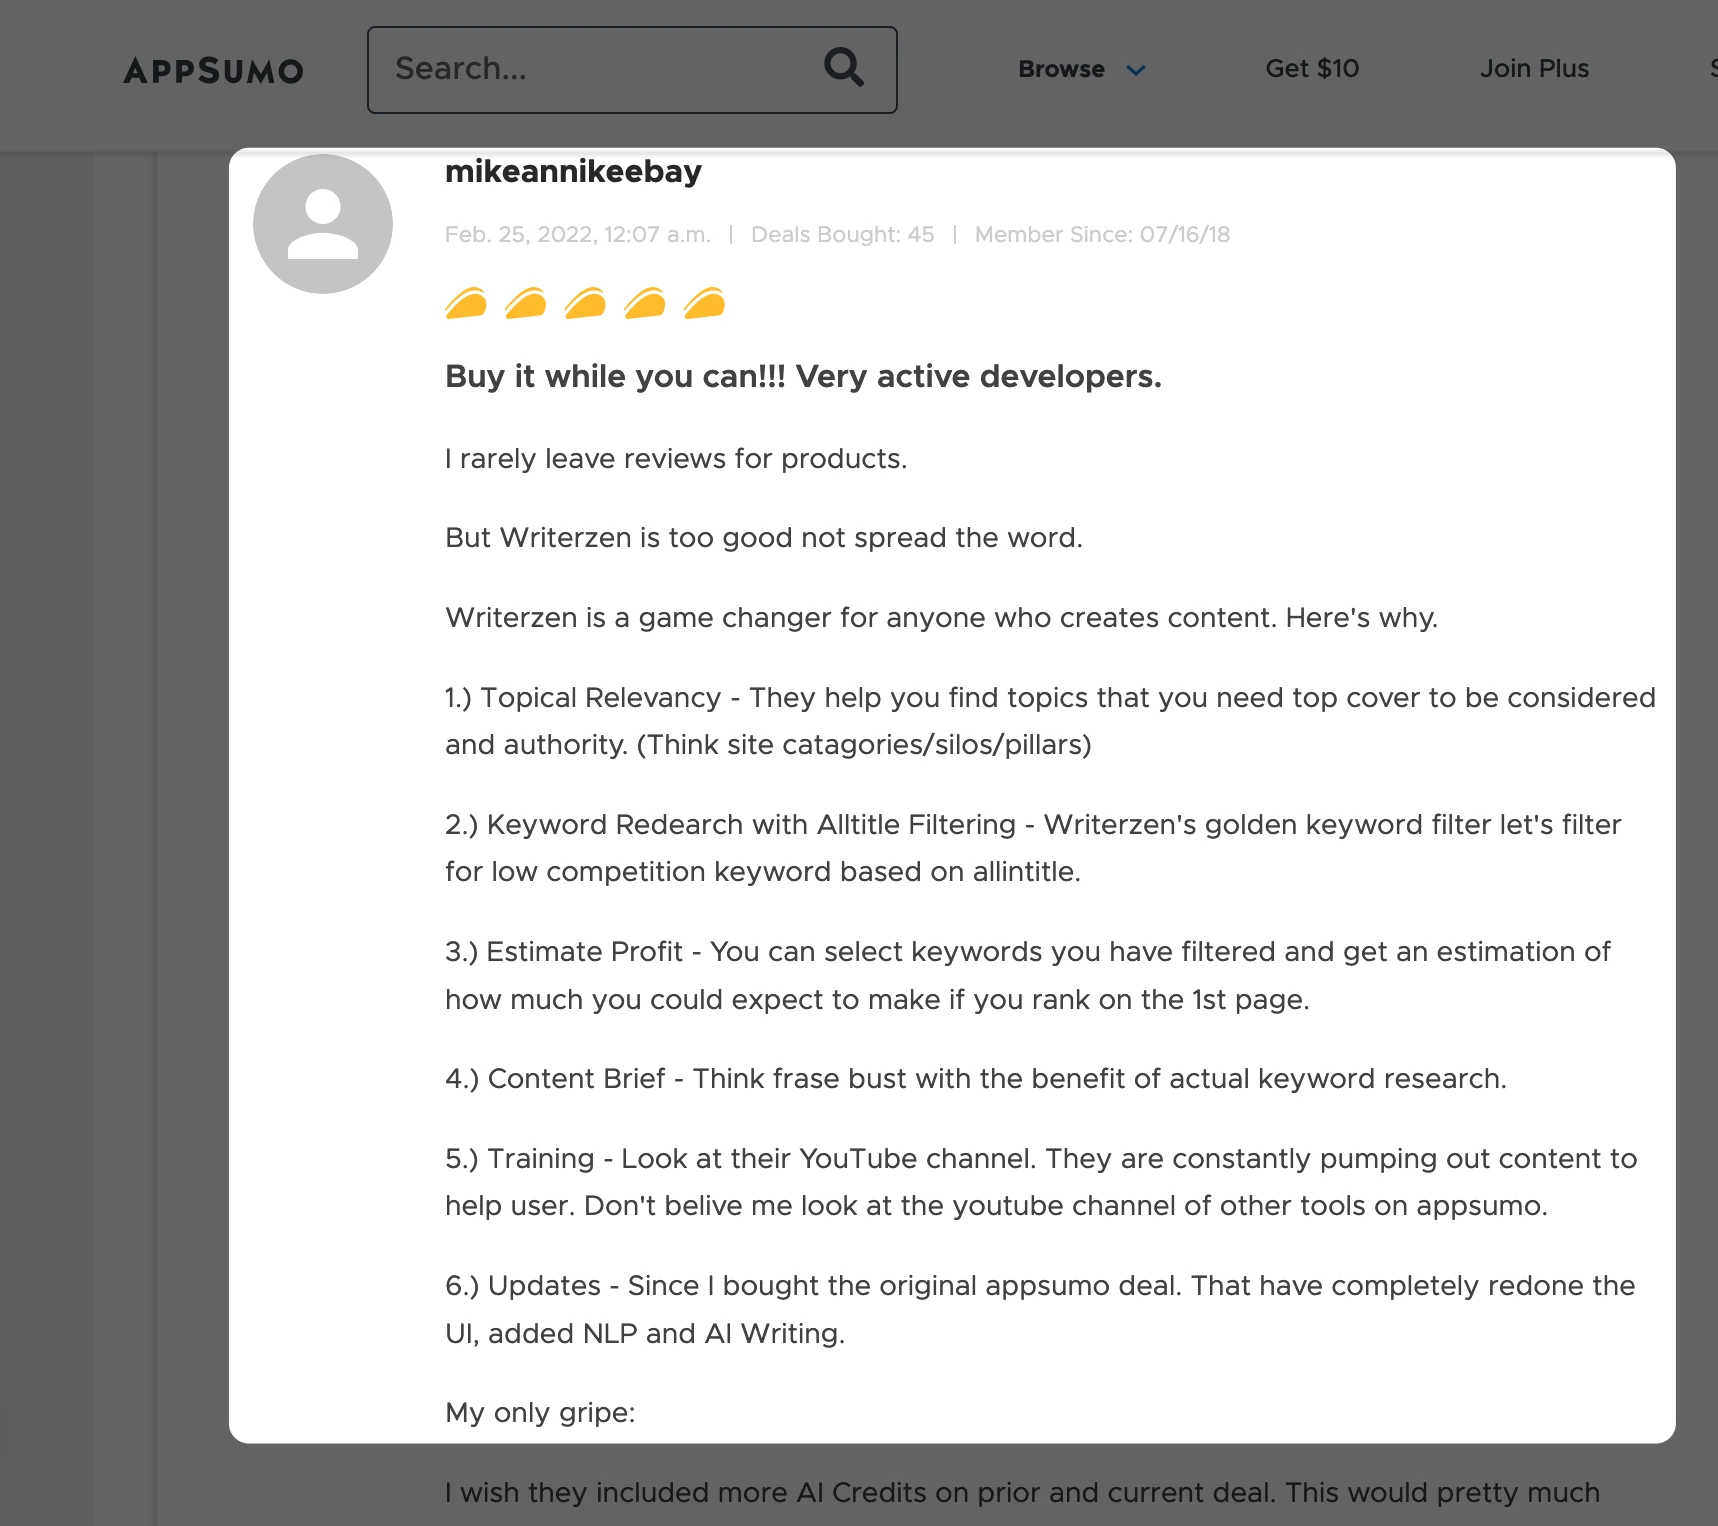 A 5-star review on WriterZen on Appsumo